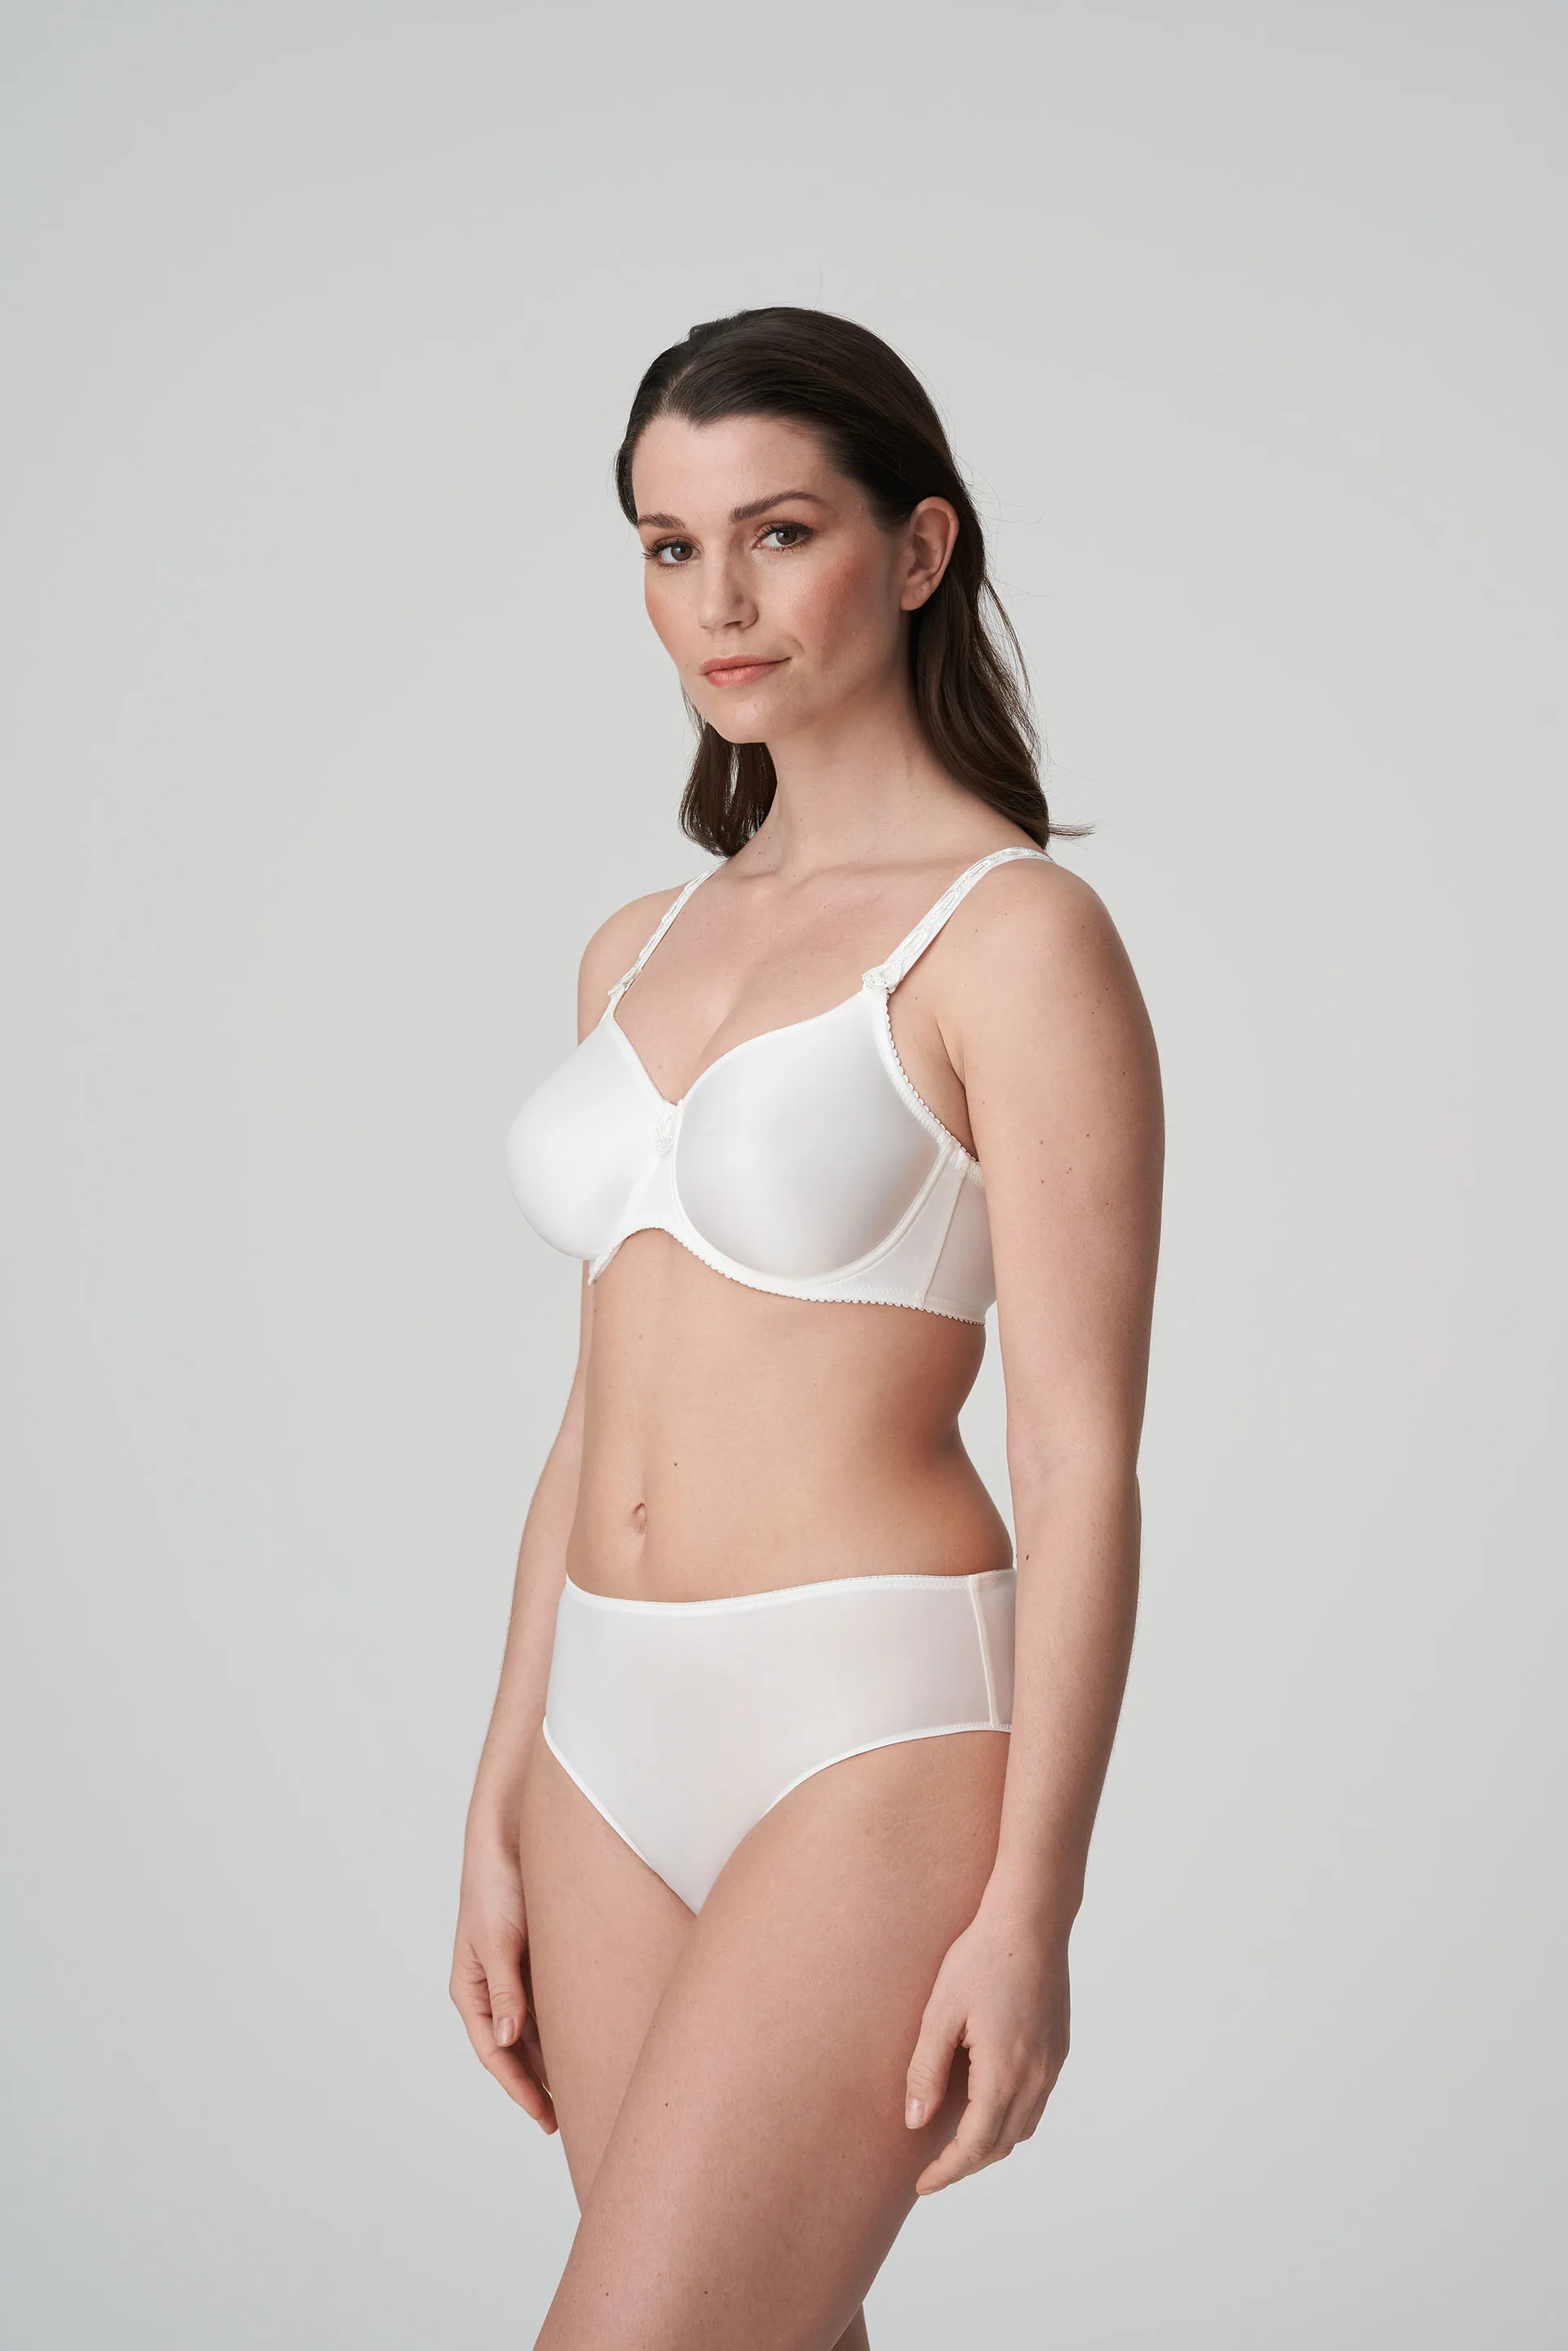 Buy Women's Girls Non Padded Cotton Bra in White Color-Prima - White at